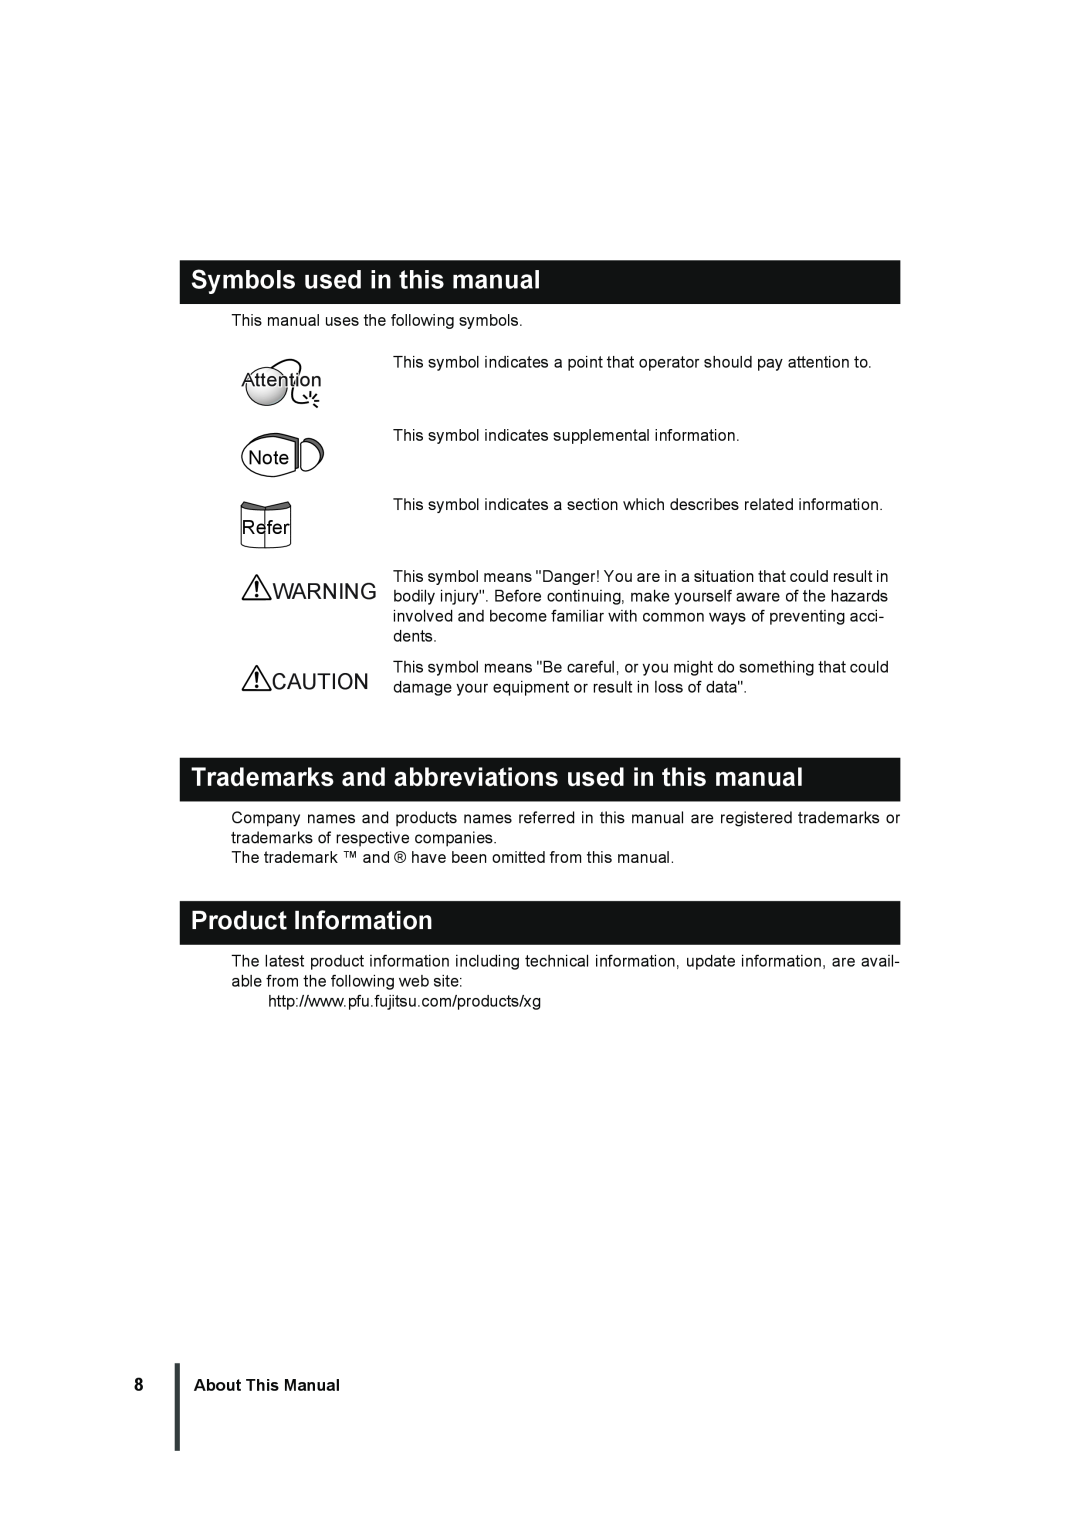 Fujitsu XG1200 Symbols used in this manual, Trademarks and abbreviations used in this manual, Product Information, Refer 